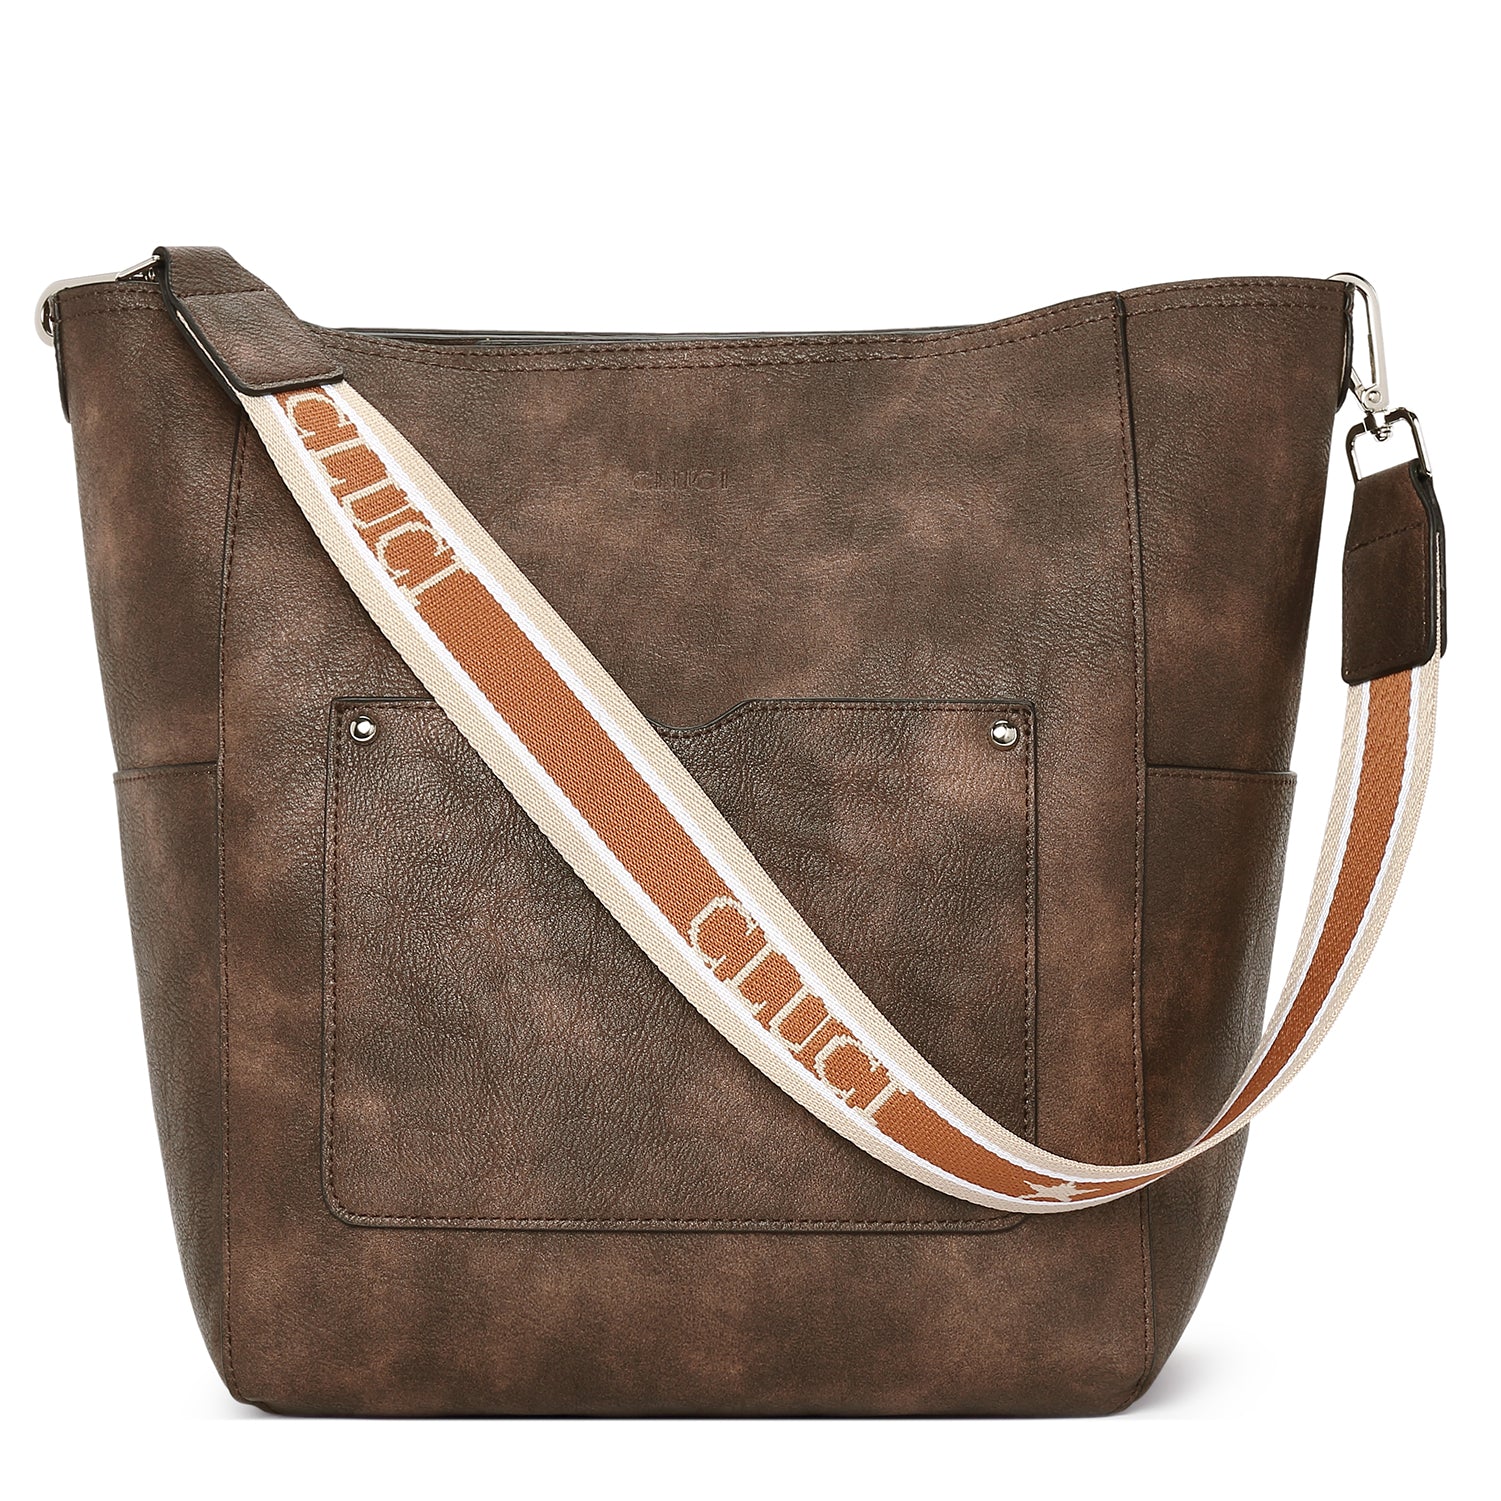 CLUCI Purses and Handbags for women Leather Designer Tote Large Ladies Work Shoulder Bucket Bag